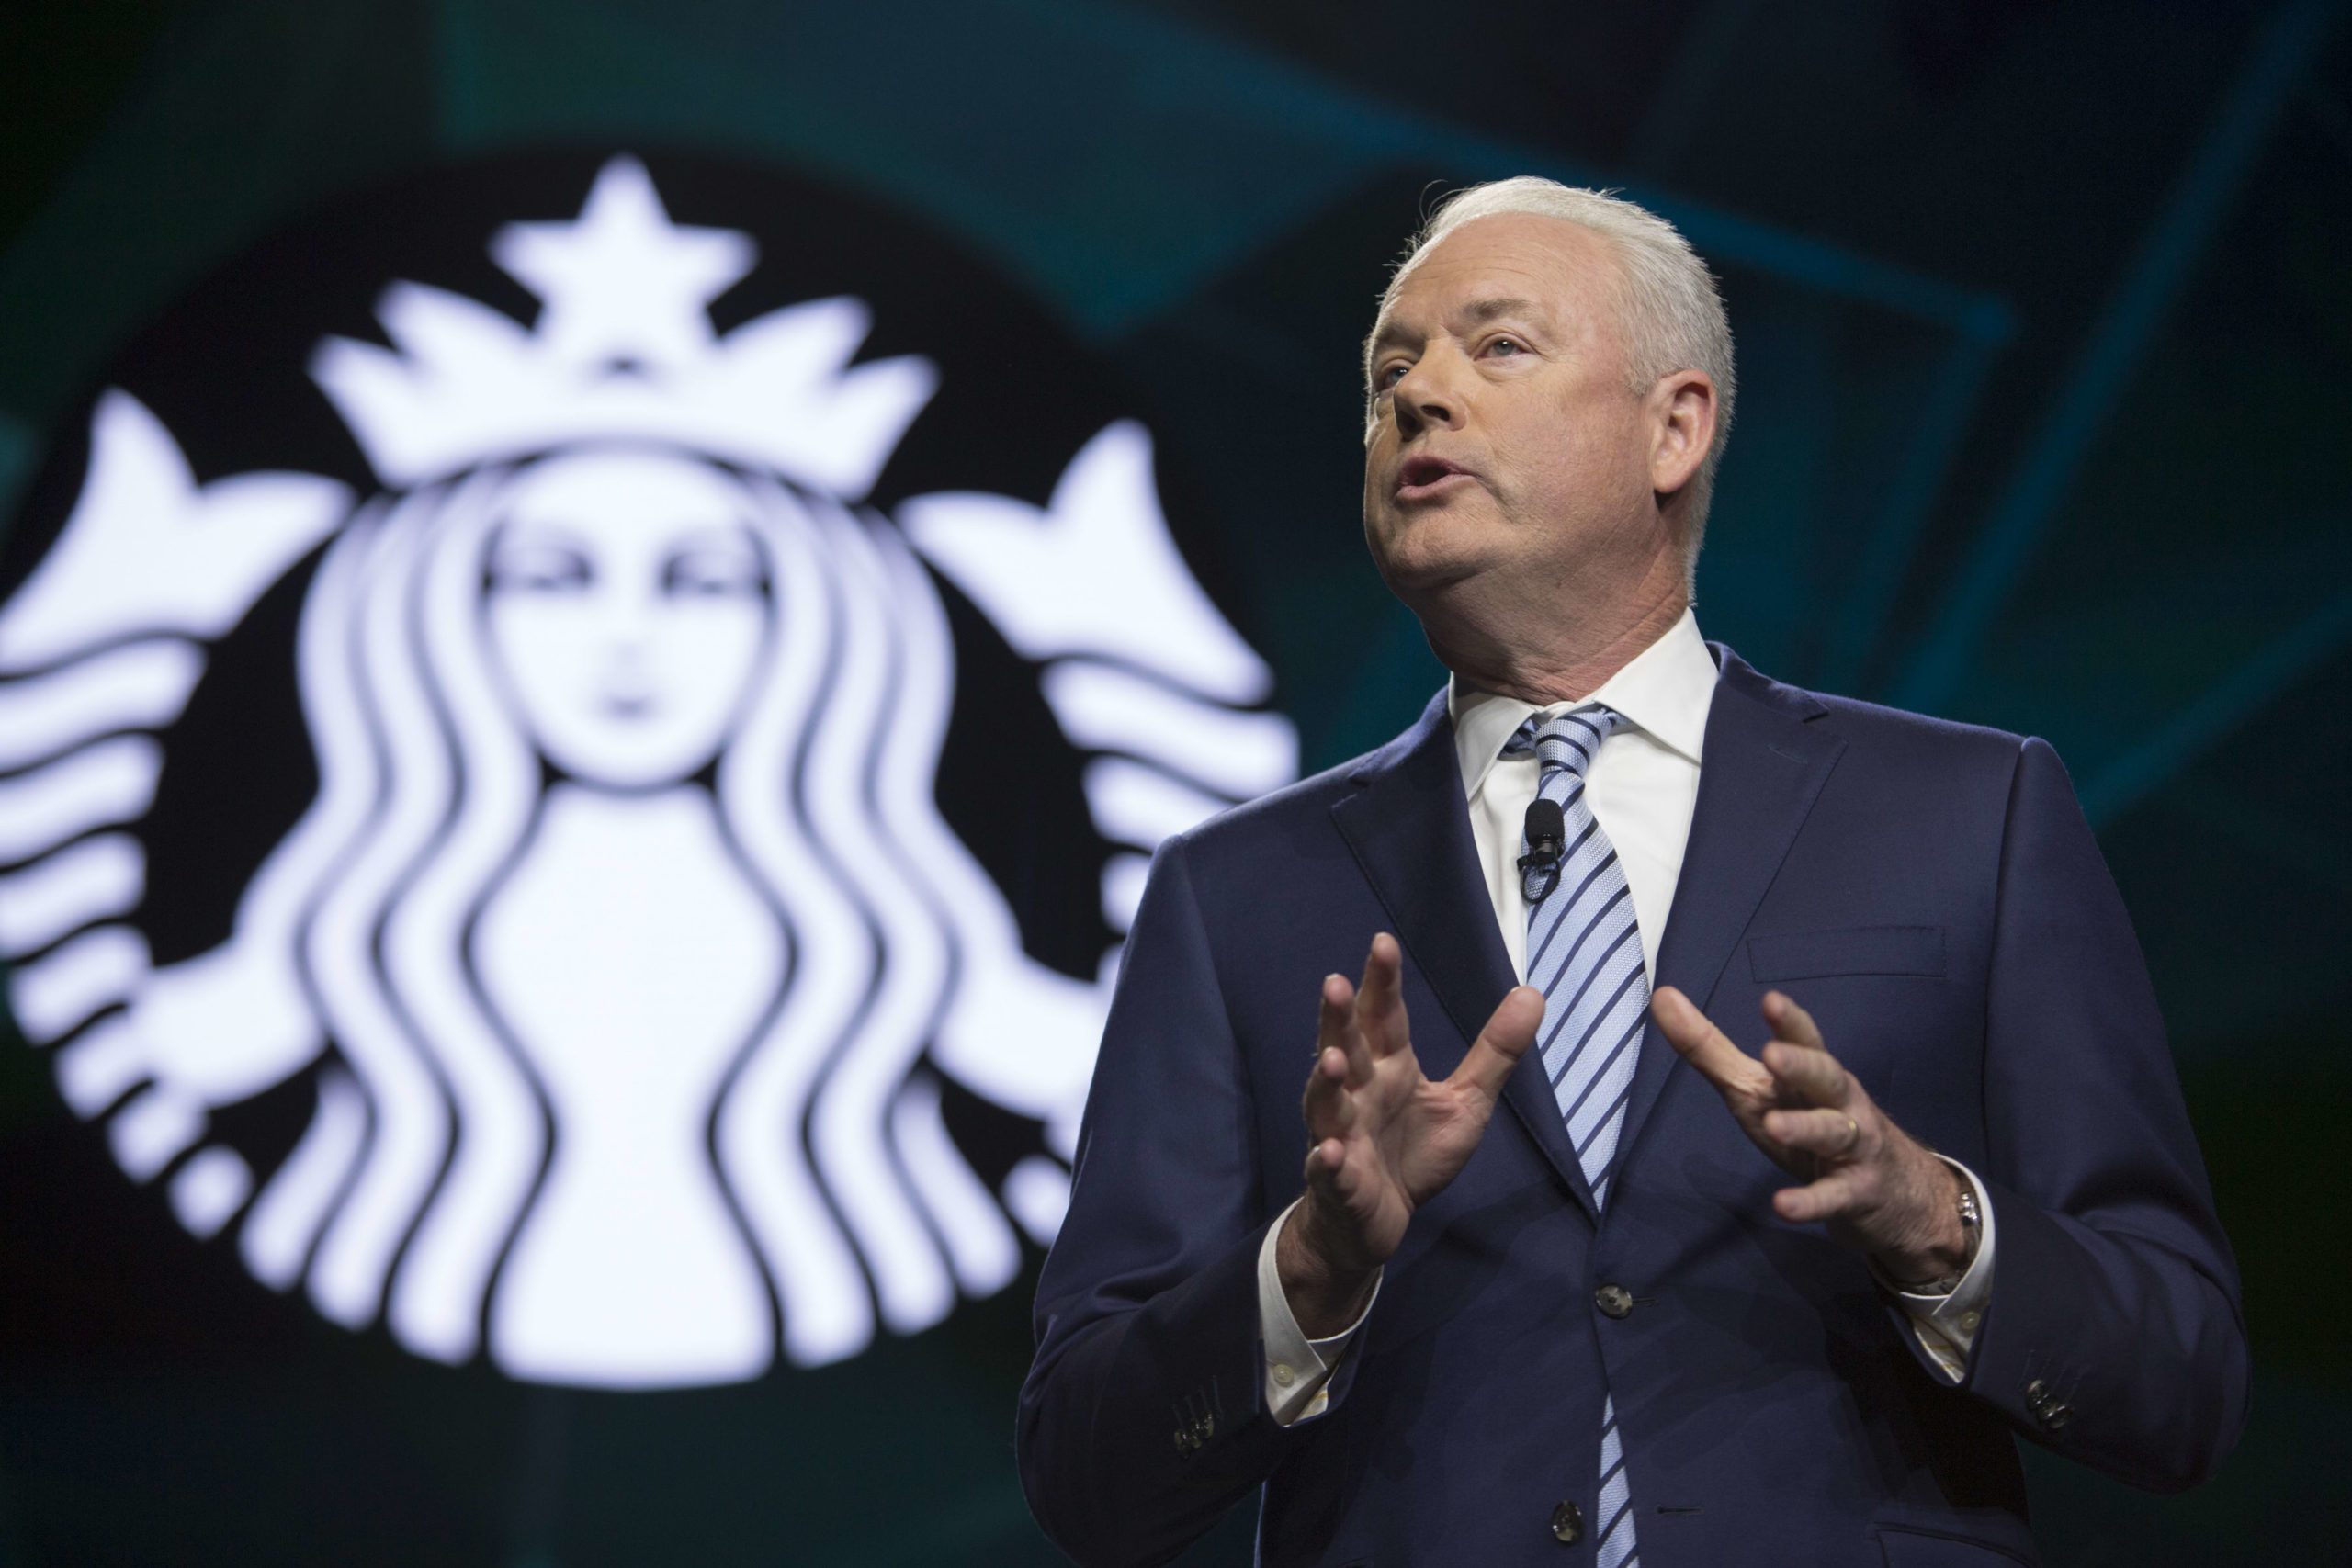 Starbucks (SBUX) earnings Q1 2020 beat estimates